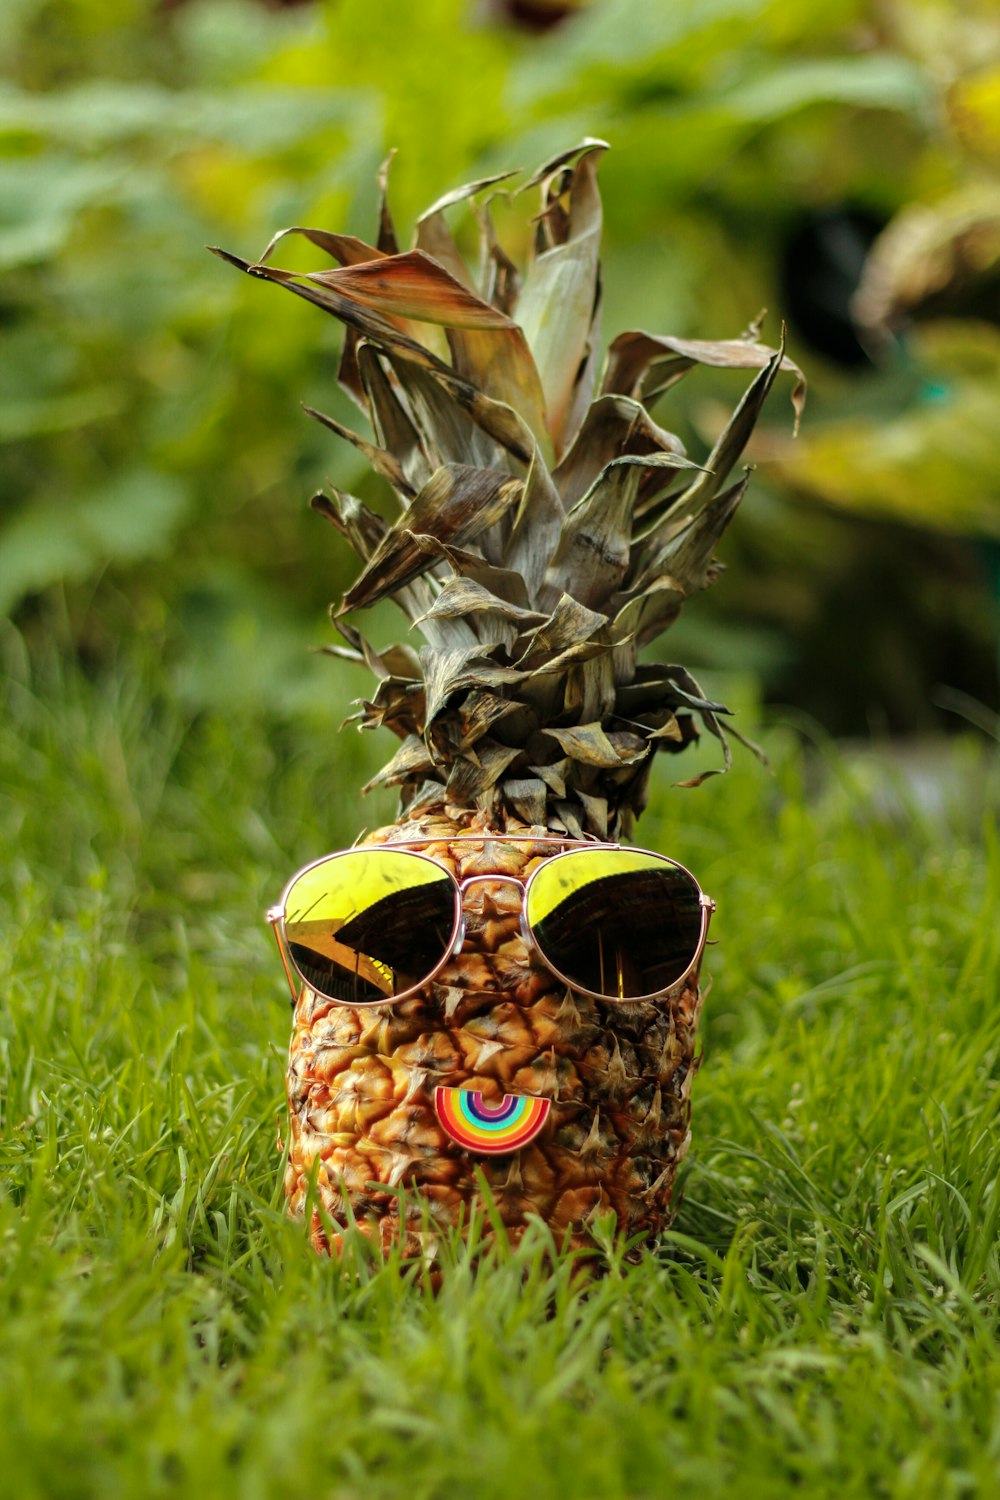 pineapple wearing sunglasses on grass